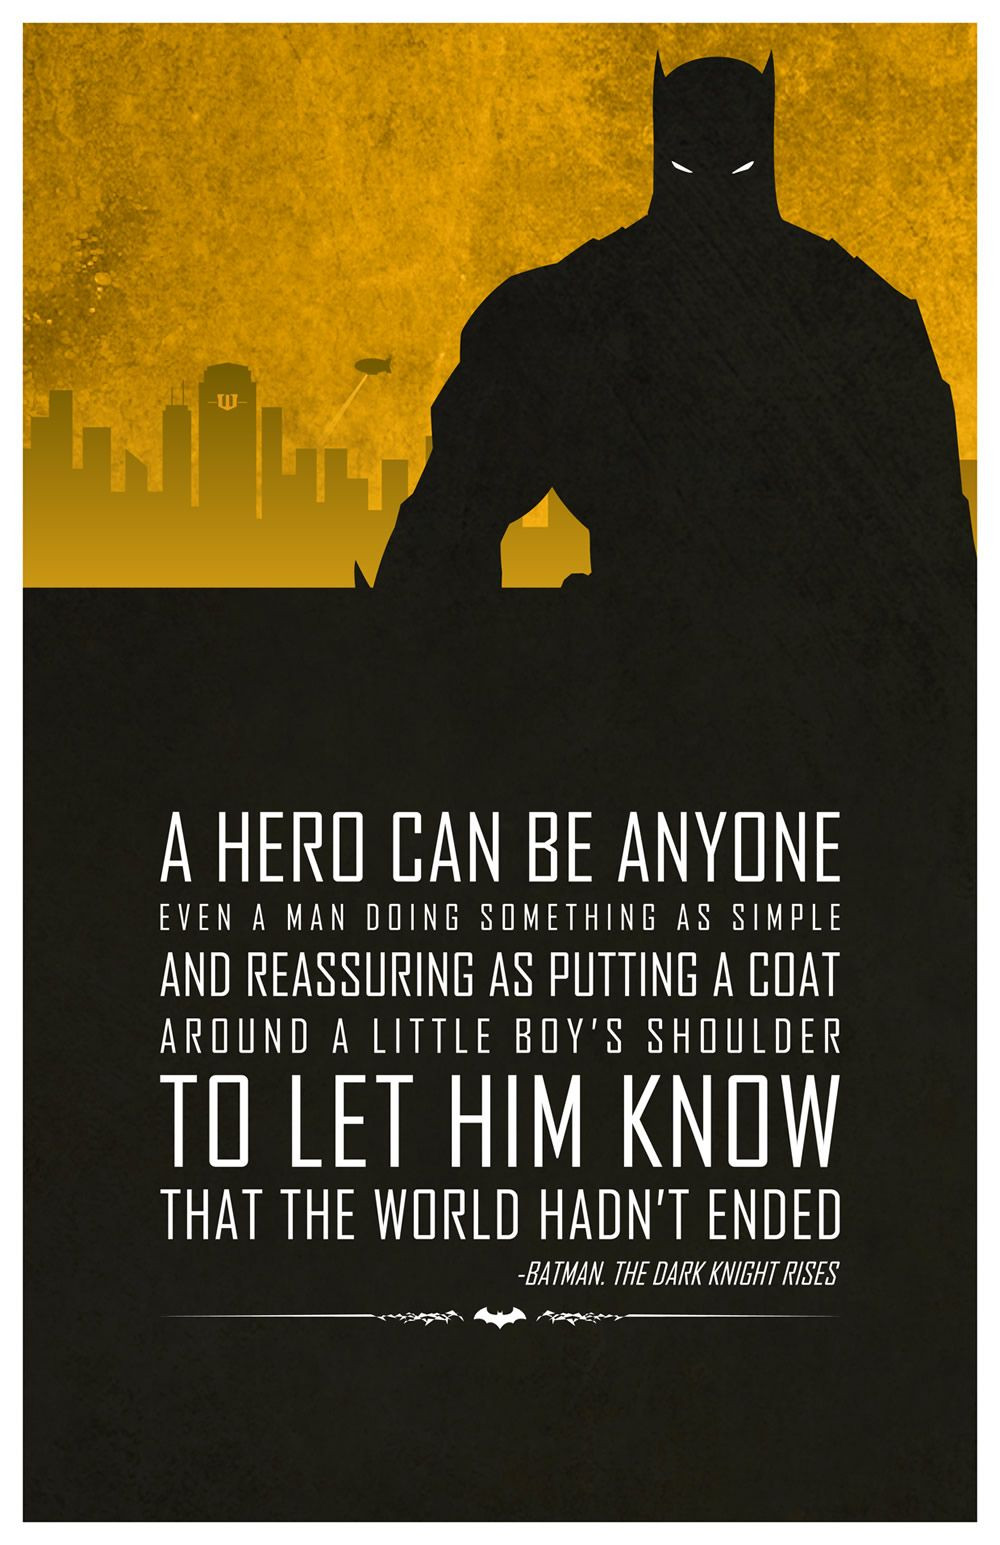 Inspirational Marvel Quotes
 Motivational Superhero Quotes